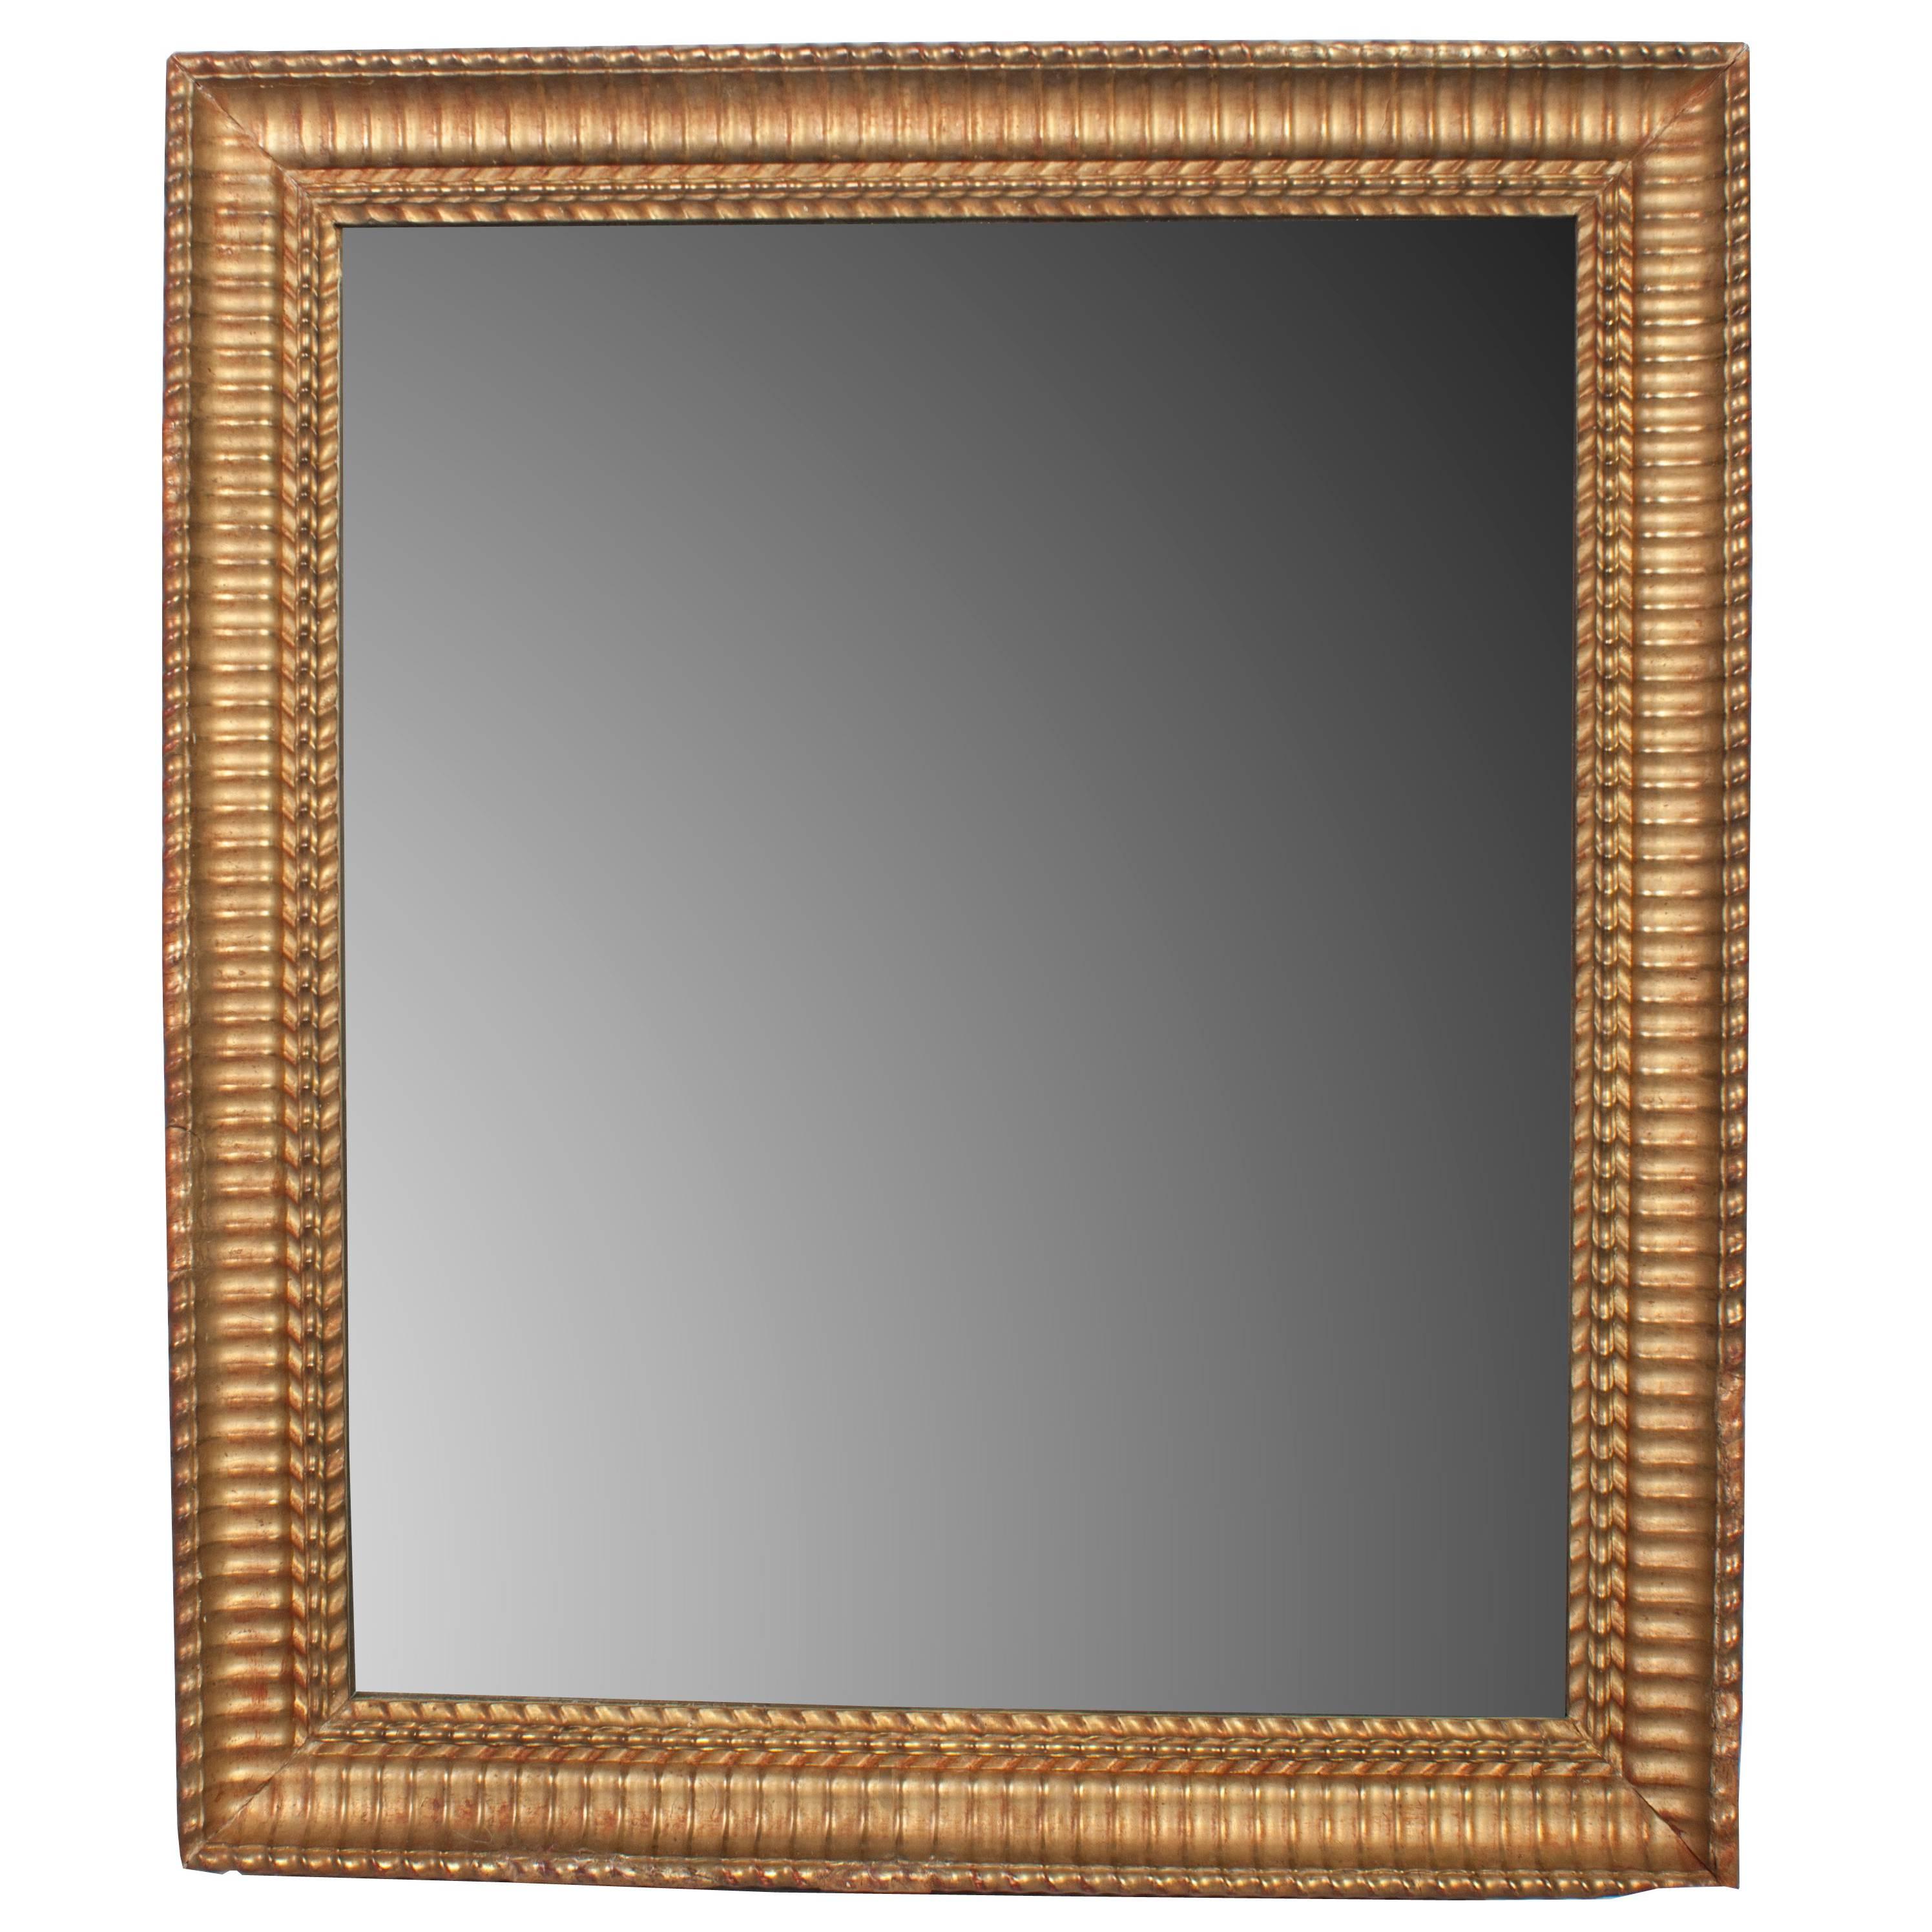 Gilt Napoleon III Mirror with Small Flame Stitch Pattern Trim Frame